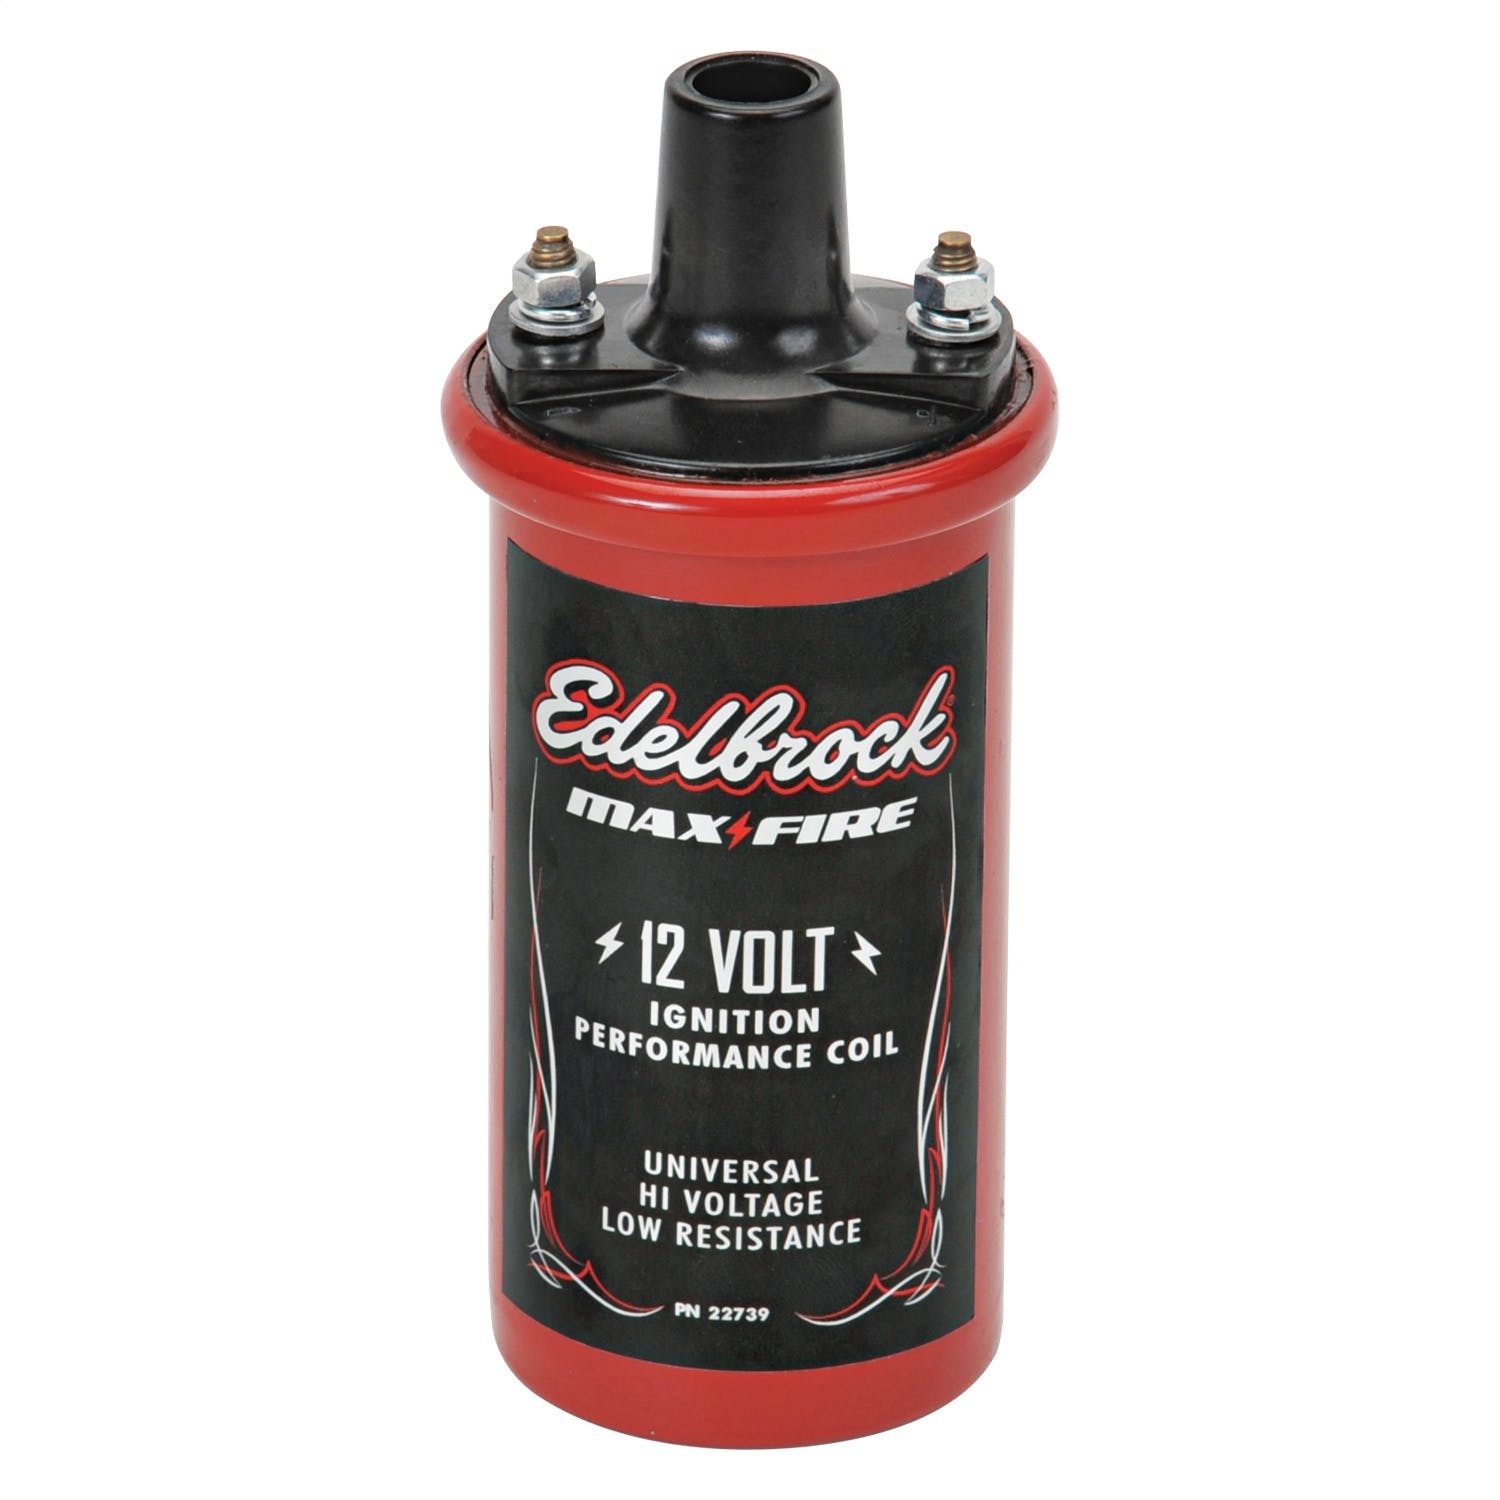 Edelbrock 22739 Universal 12V cannister-style w/primary resistance 1.4 ohms output of 42000V.